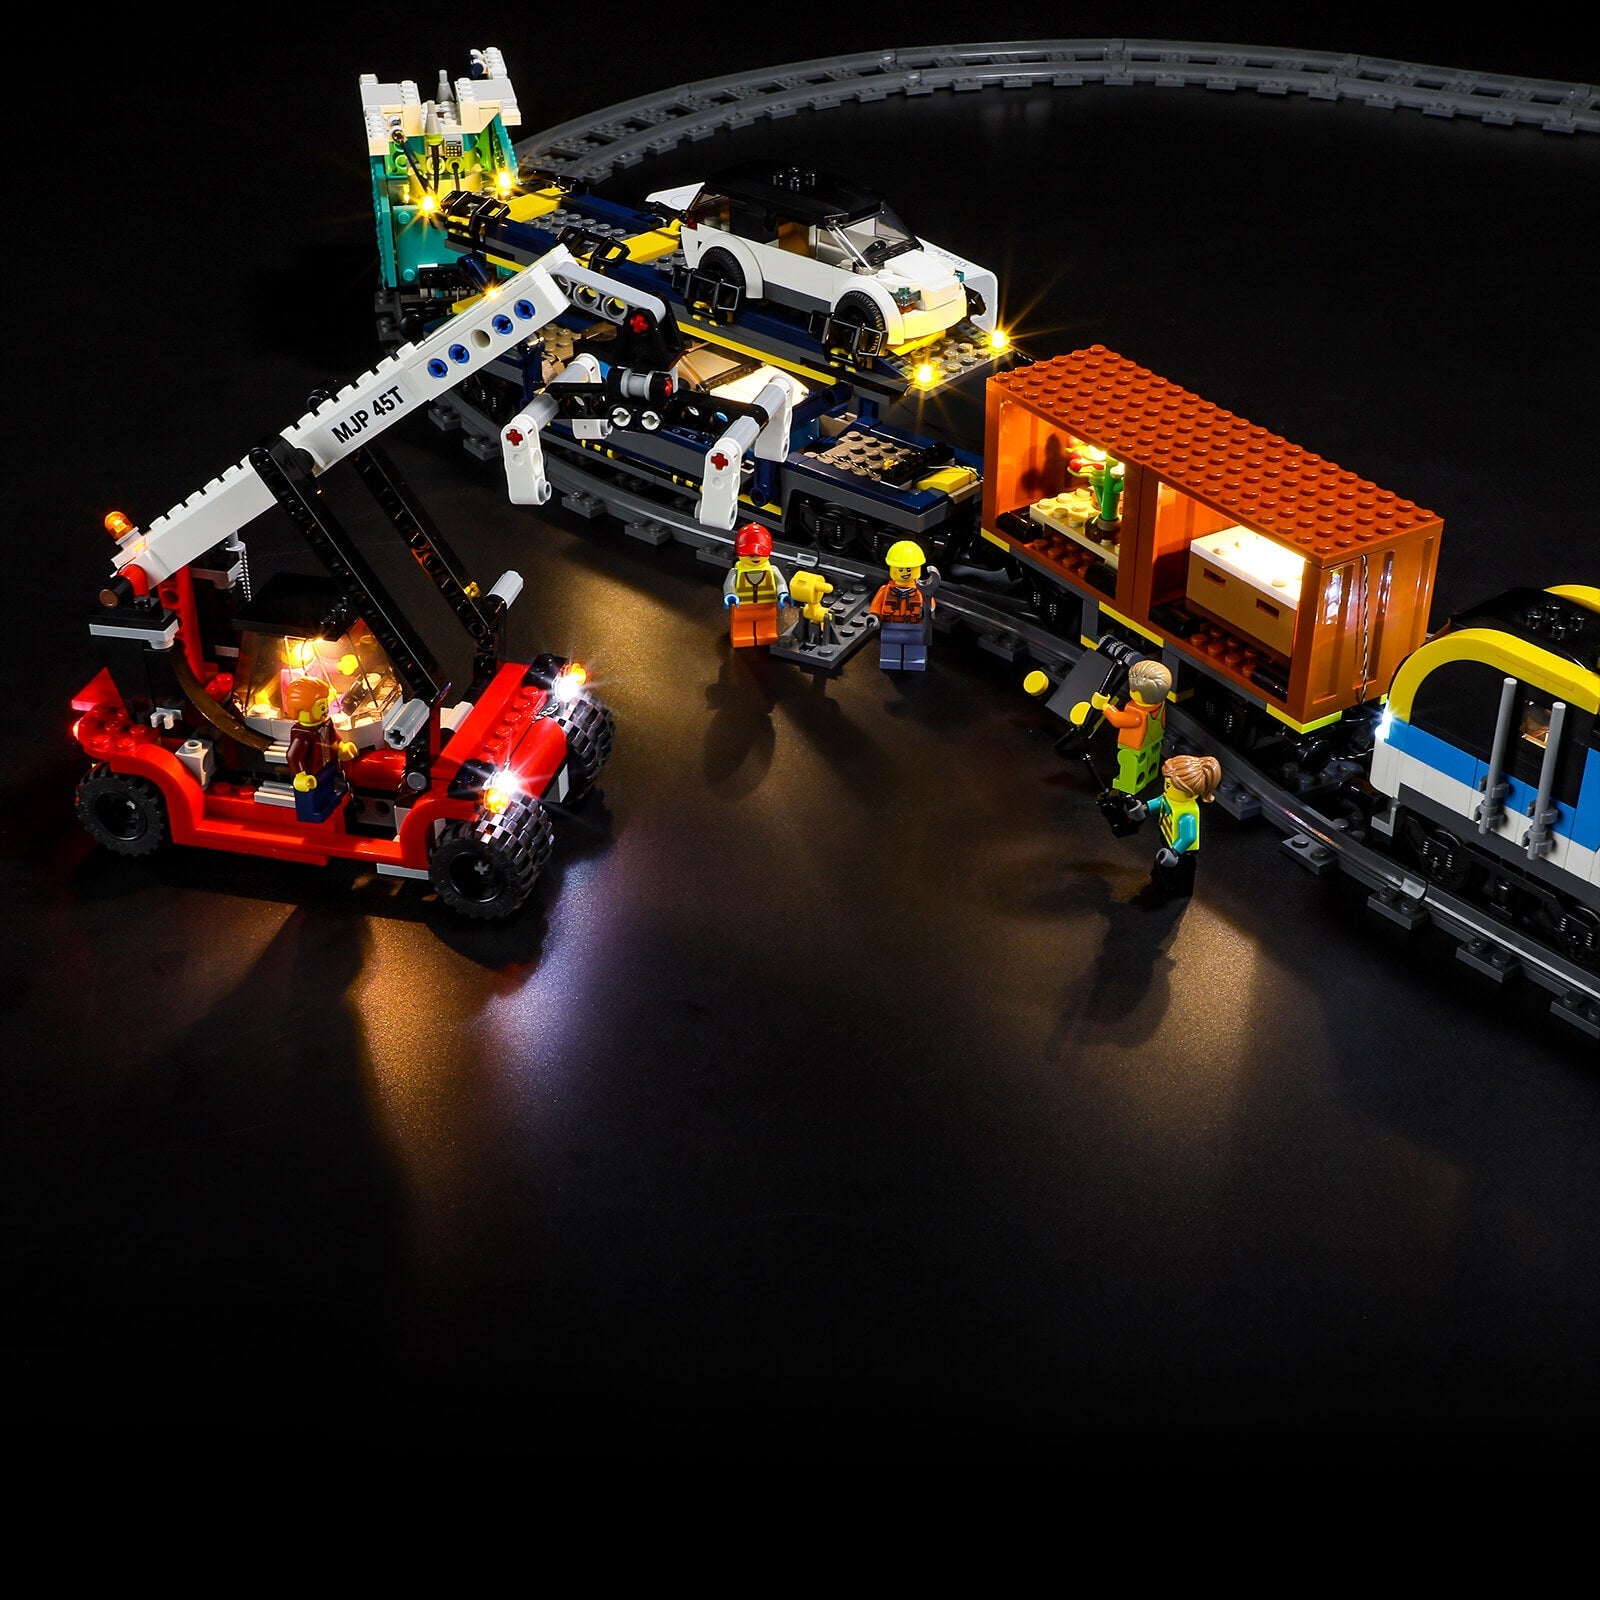 YEABRICKS LED Light for Lego-60336 City Freight Train Building Blocks Model  (Lego Set NOT Included)